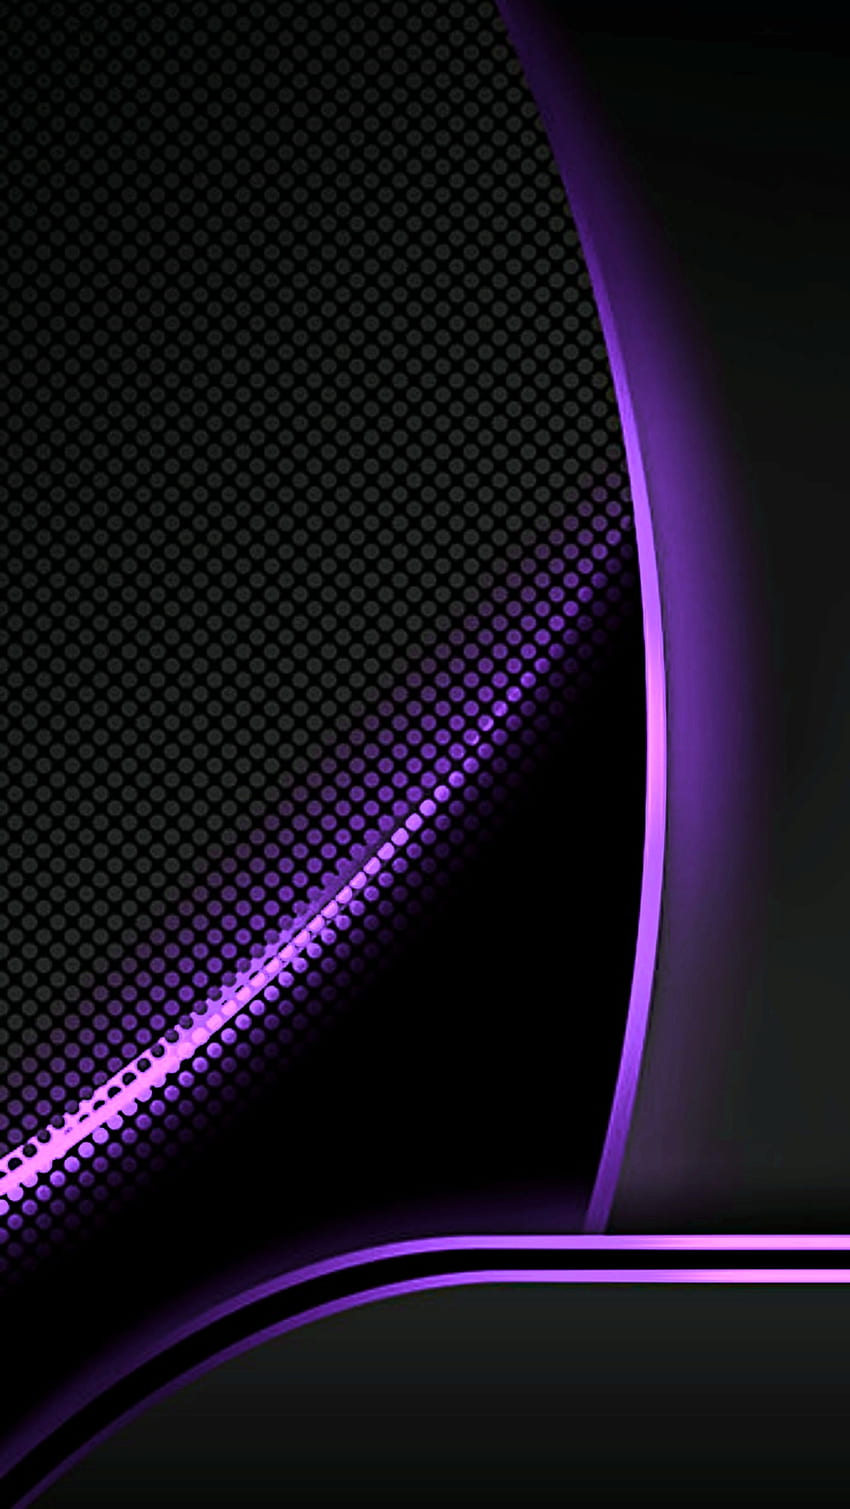 kurva ungu hitam 3d, digital, garis-garis, ombak, amoled, seni, neon, desain, pola, abstrak, garis wallpaper ponsel HD